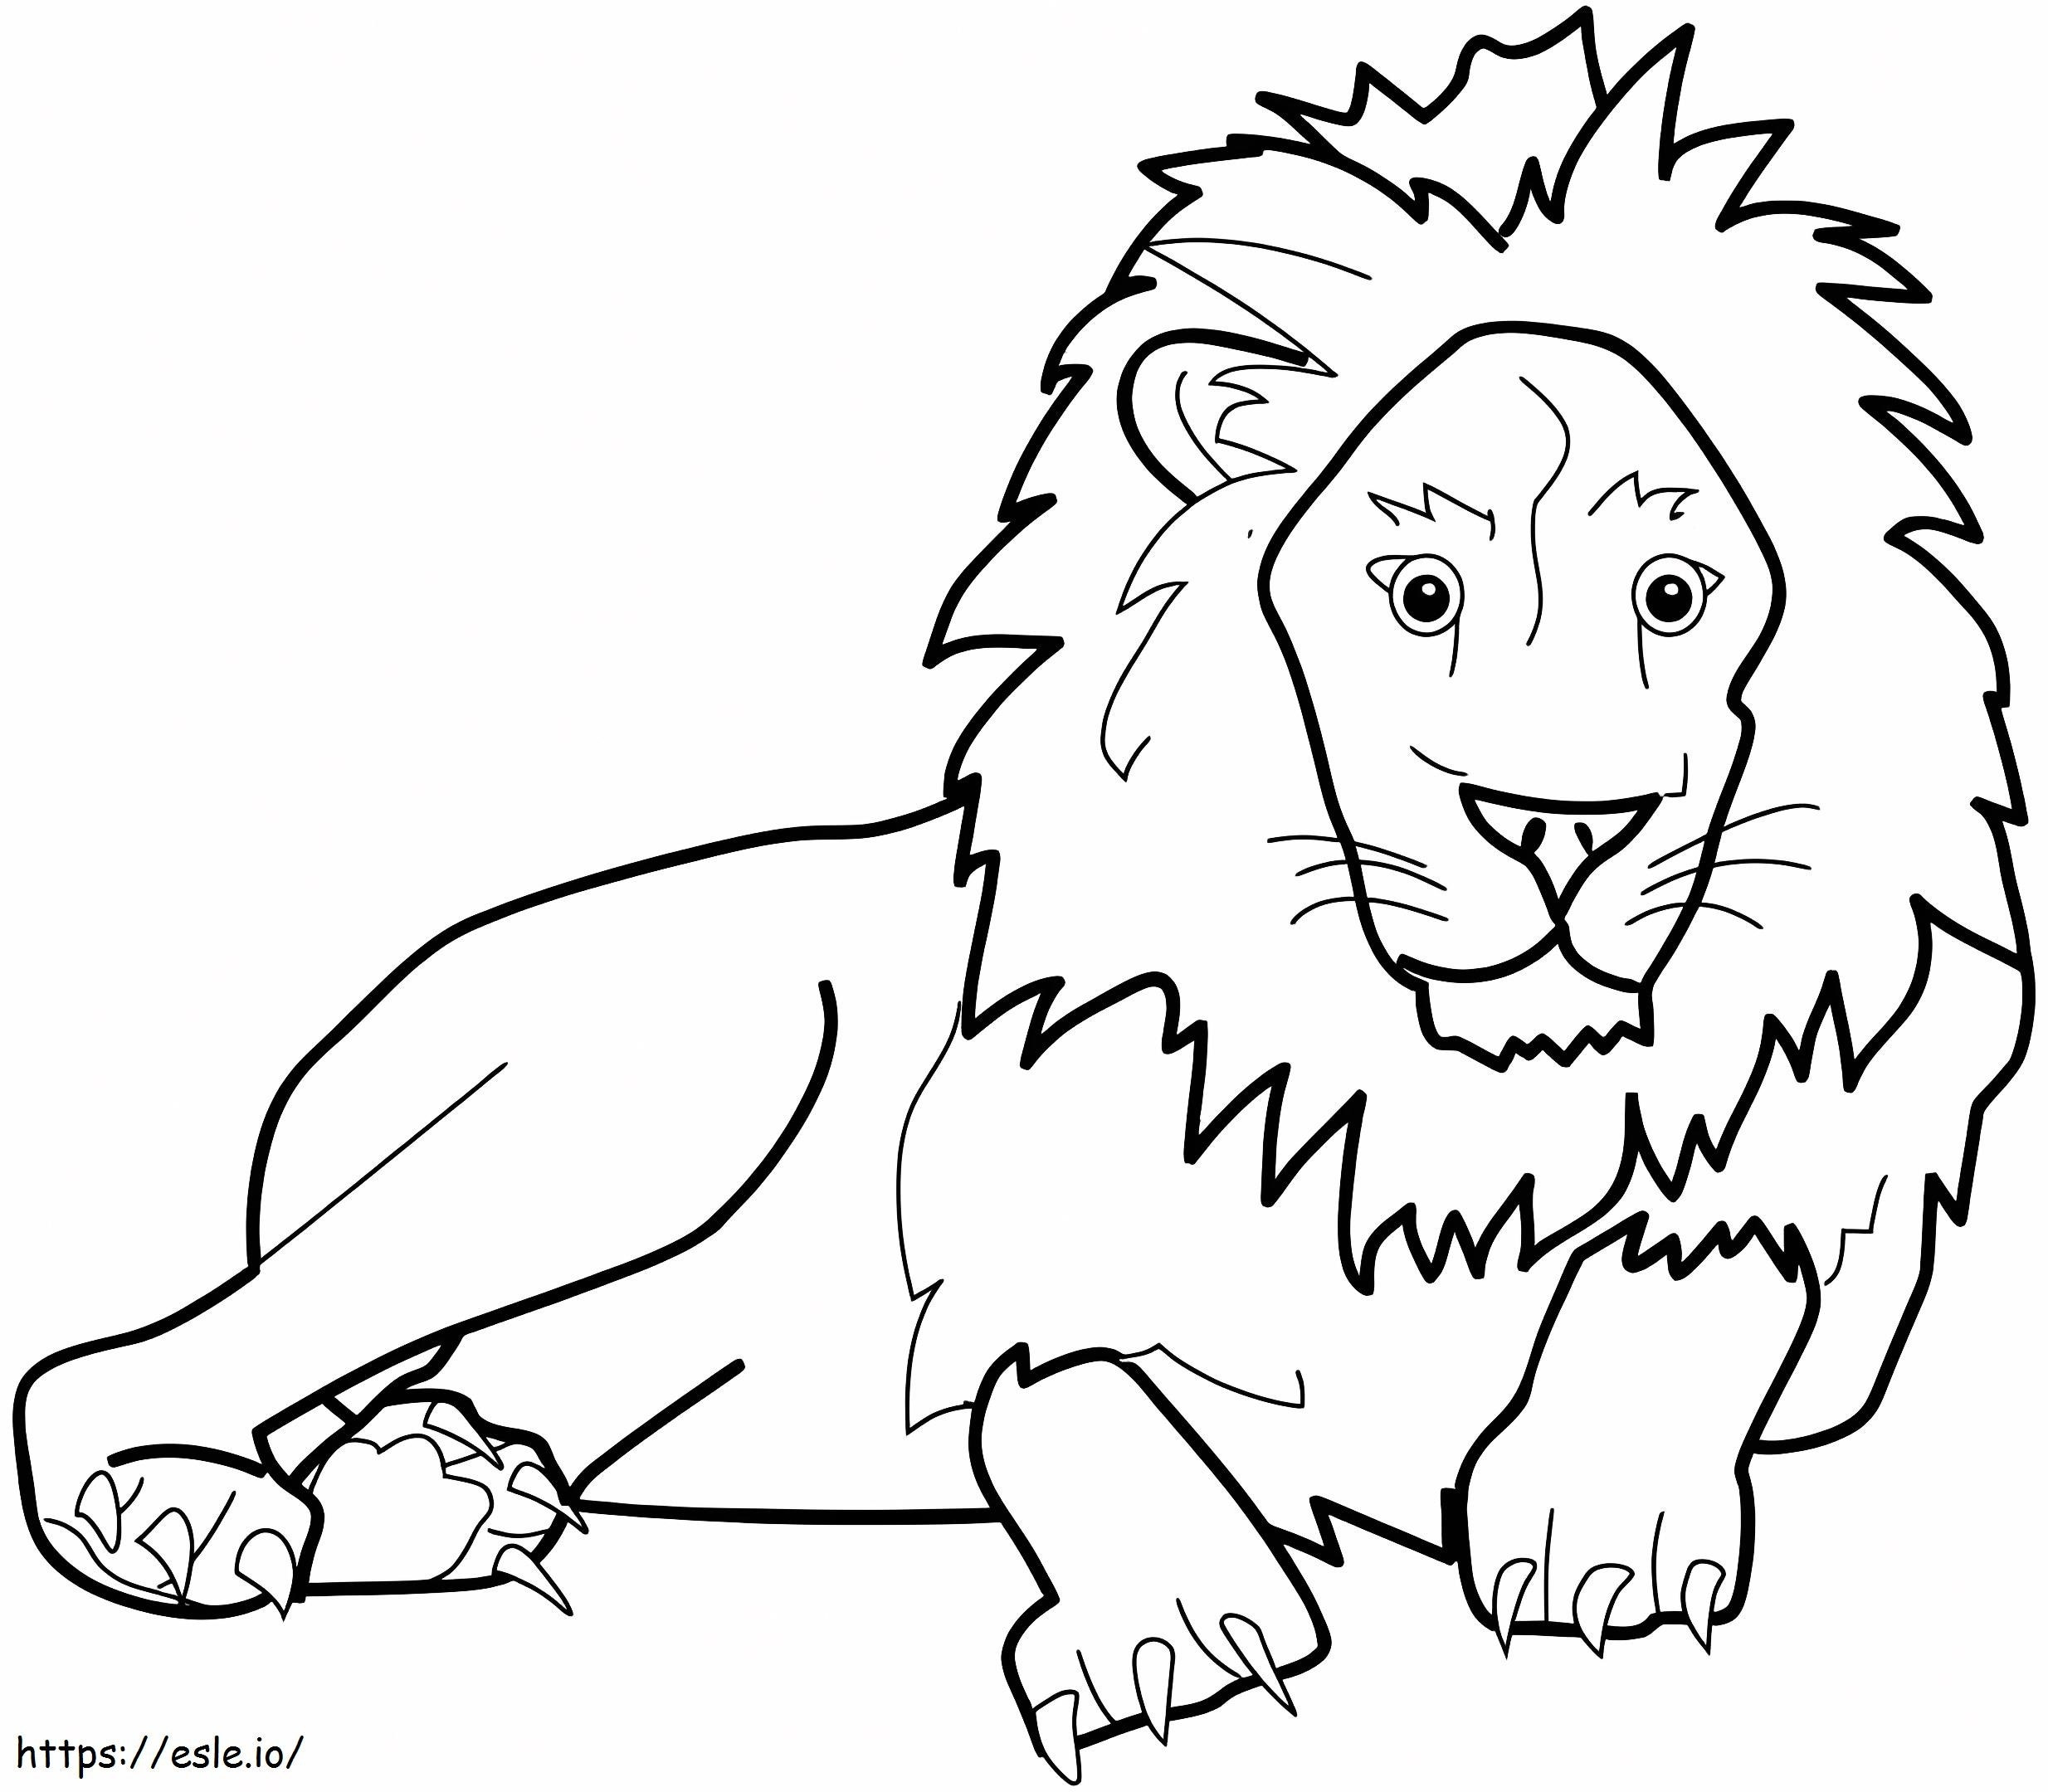 A Lion coloring page